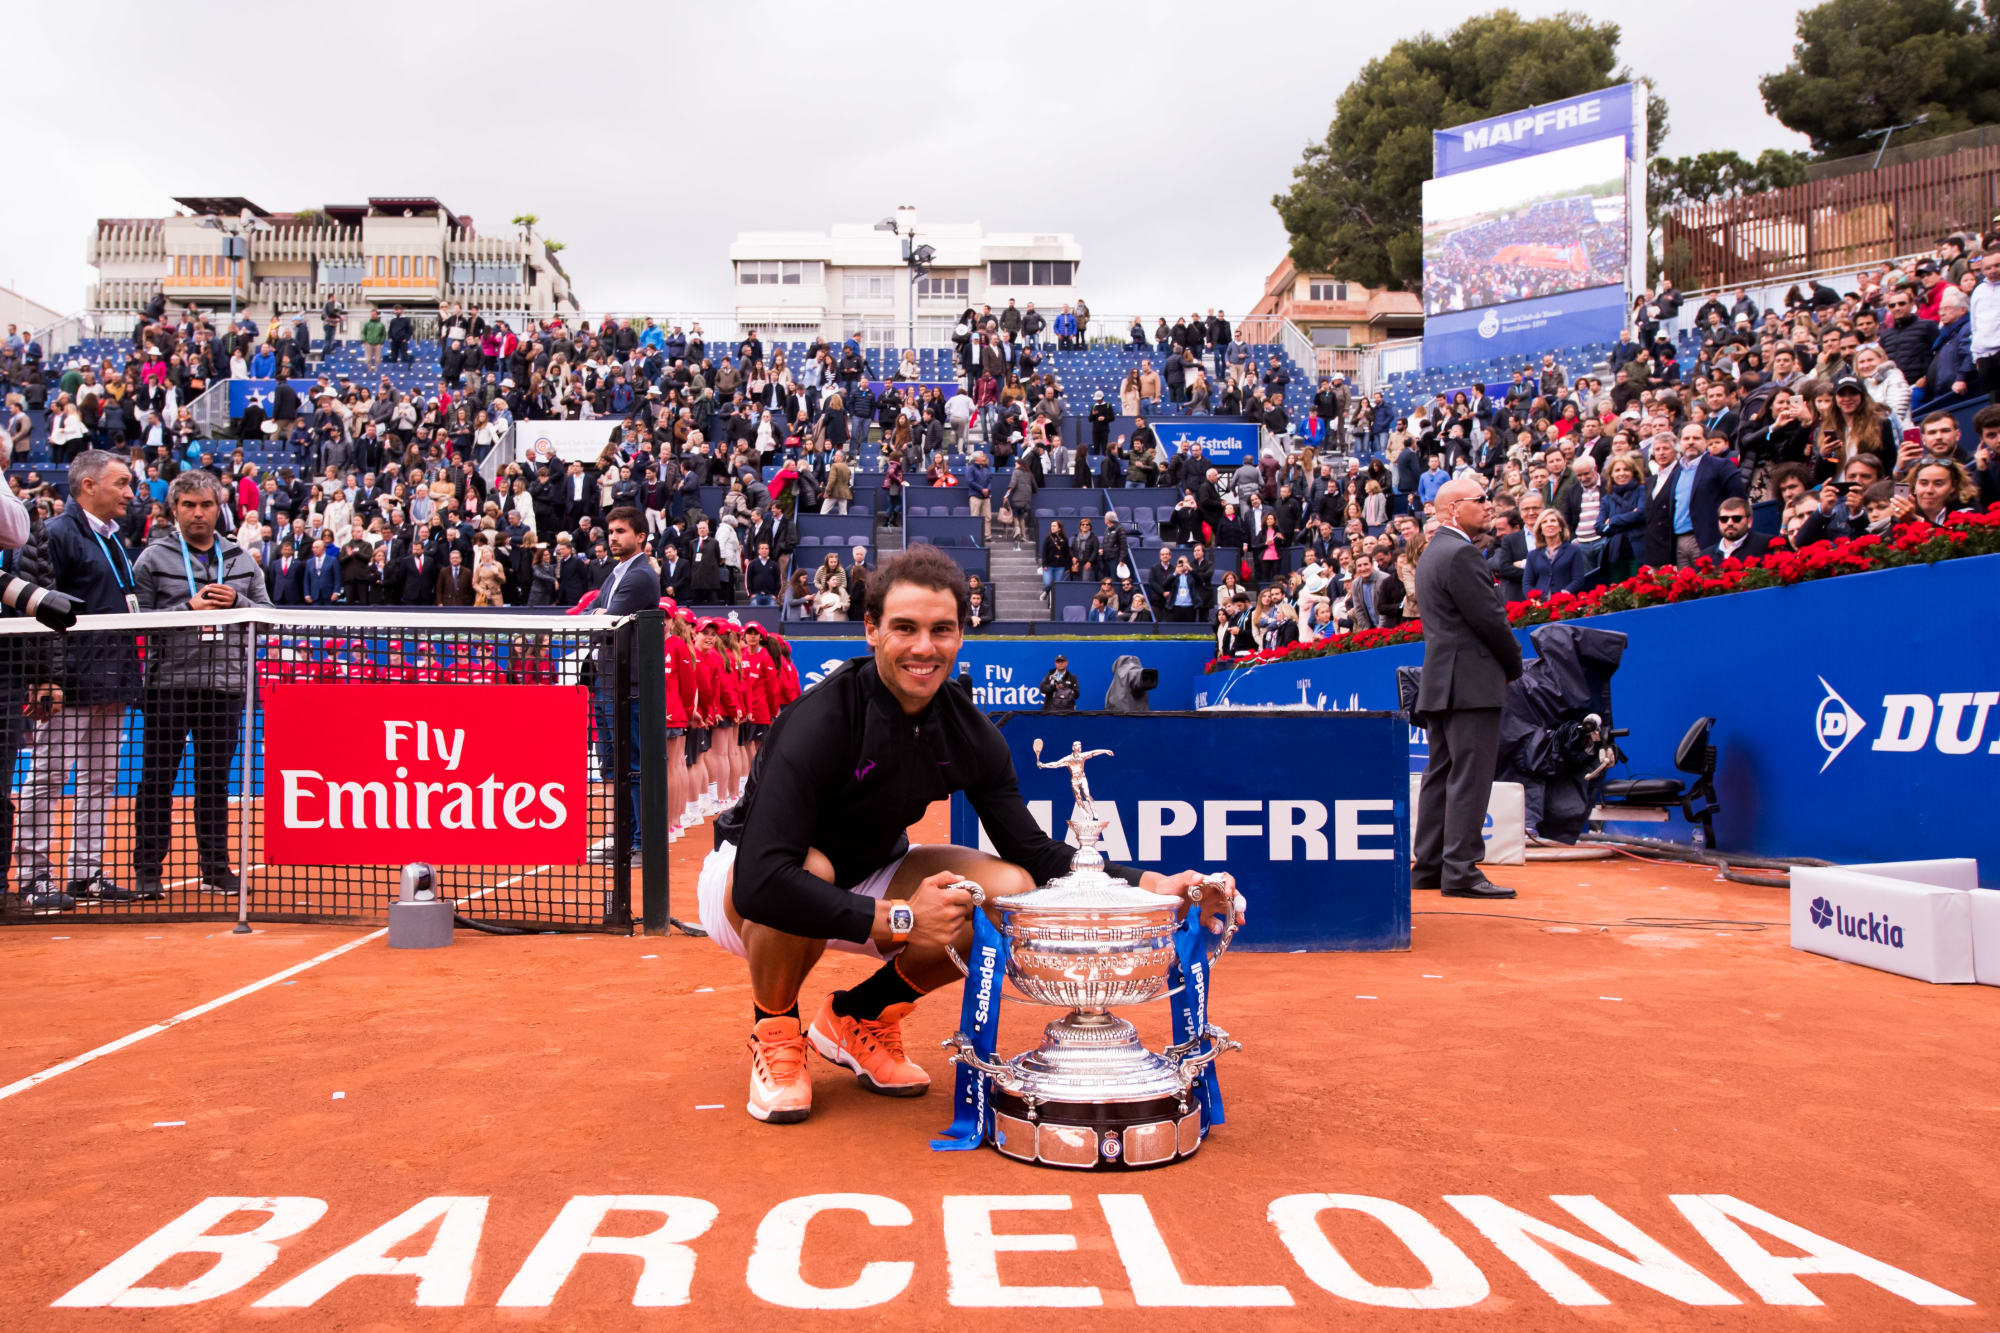 Rafael Nadal wins 10th title in Barcelona